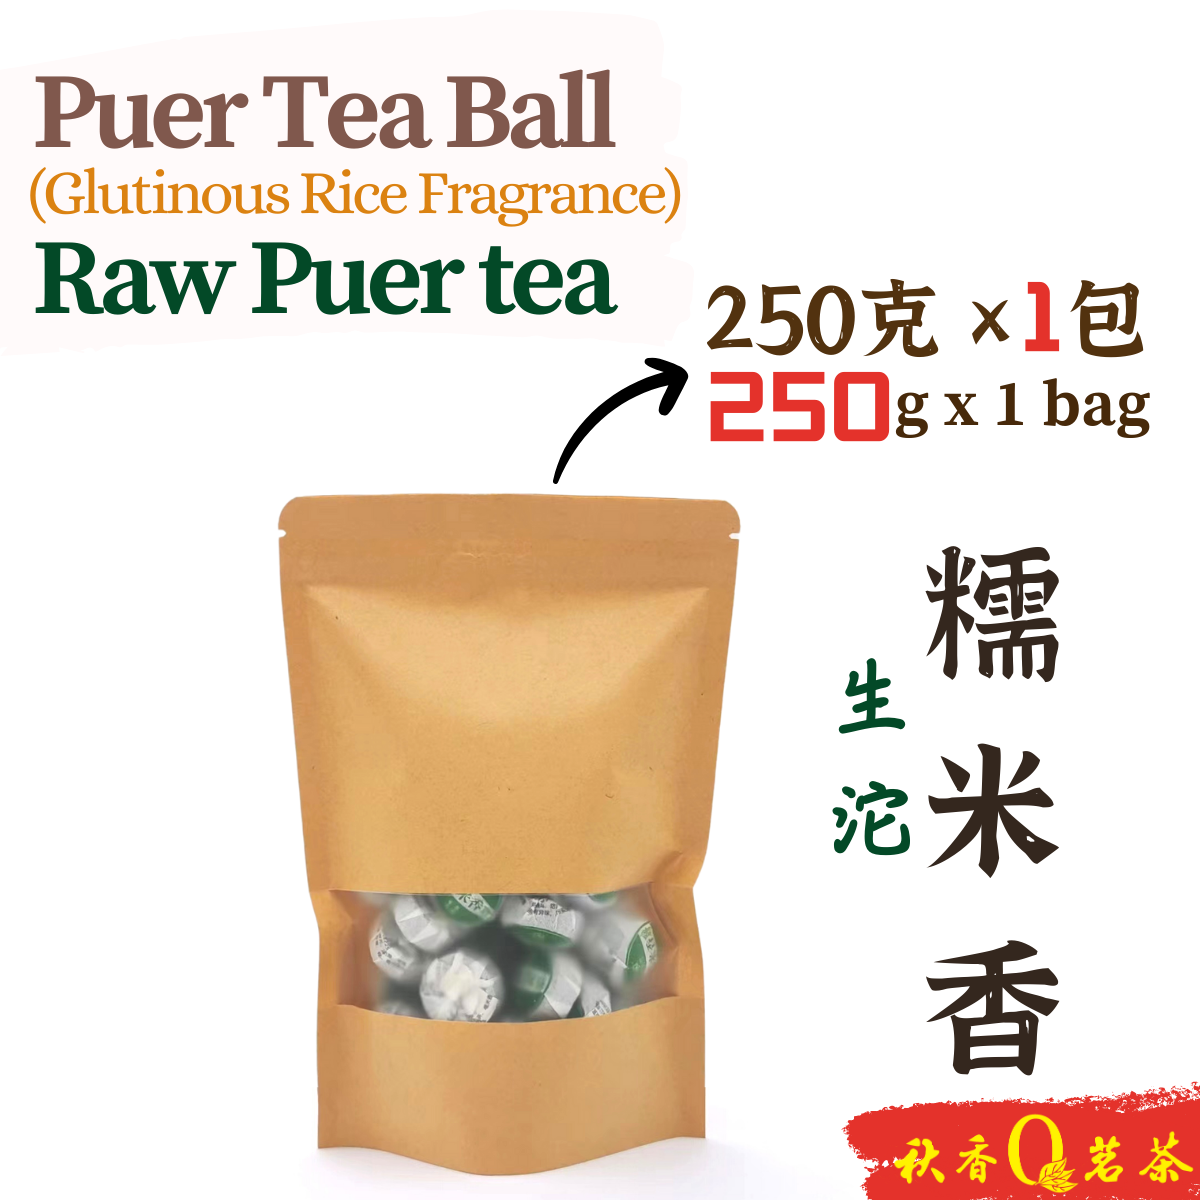 普洱茶 糯米香生沱 Glutinous Rice Fragrance Raw Puer Tea Ball【250g】|【普洱生茶 Raw Puer tea】